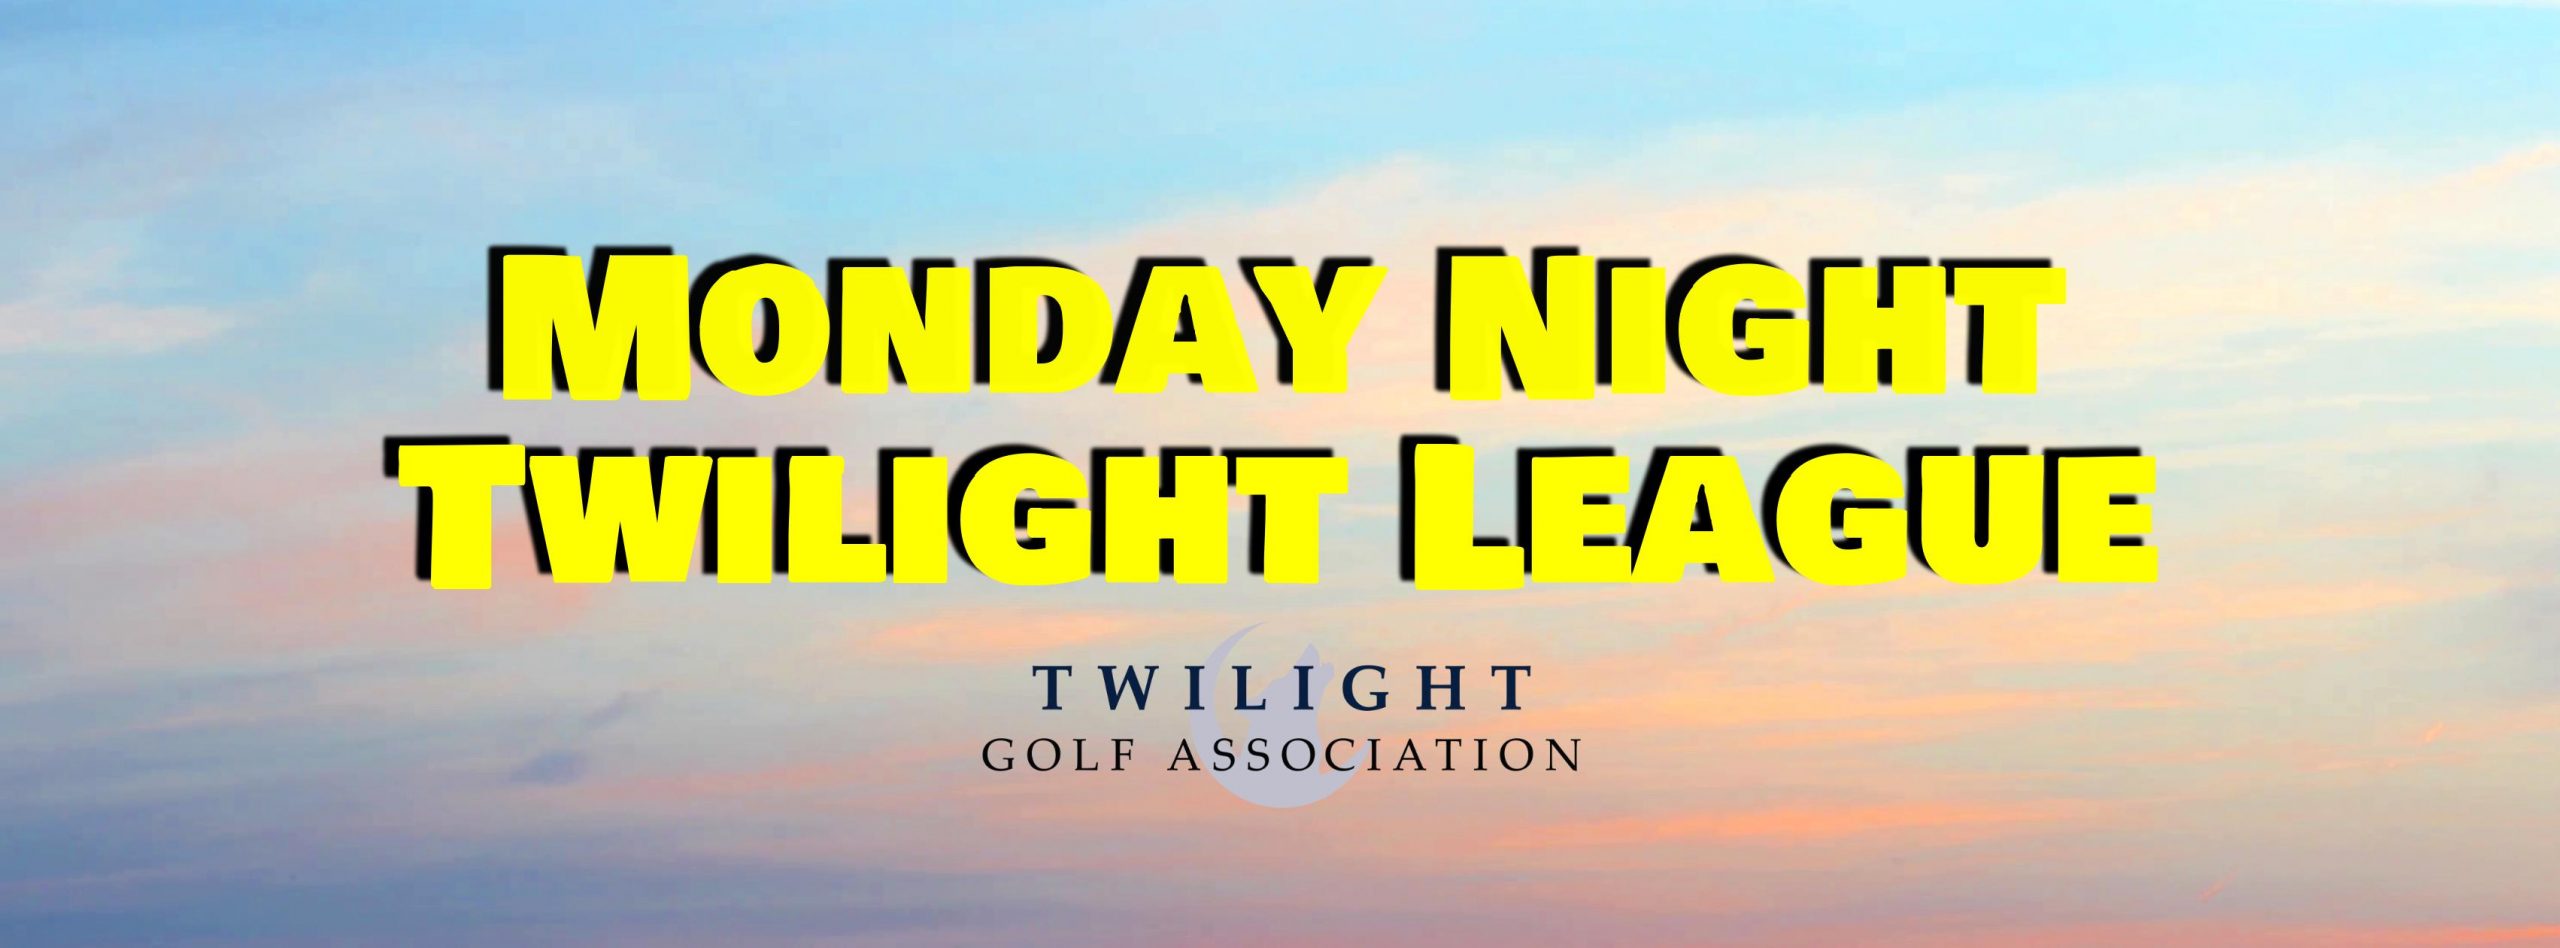 Monday Twilight League at Whitmore Lakes Golf Links